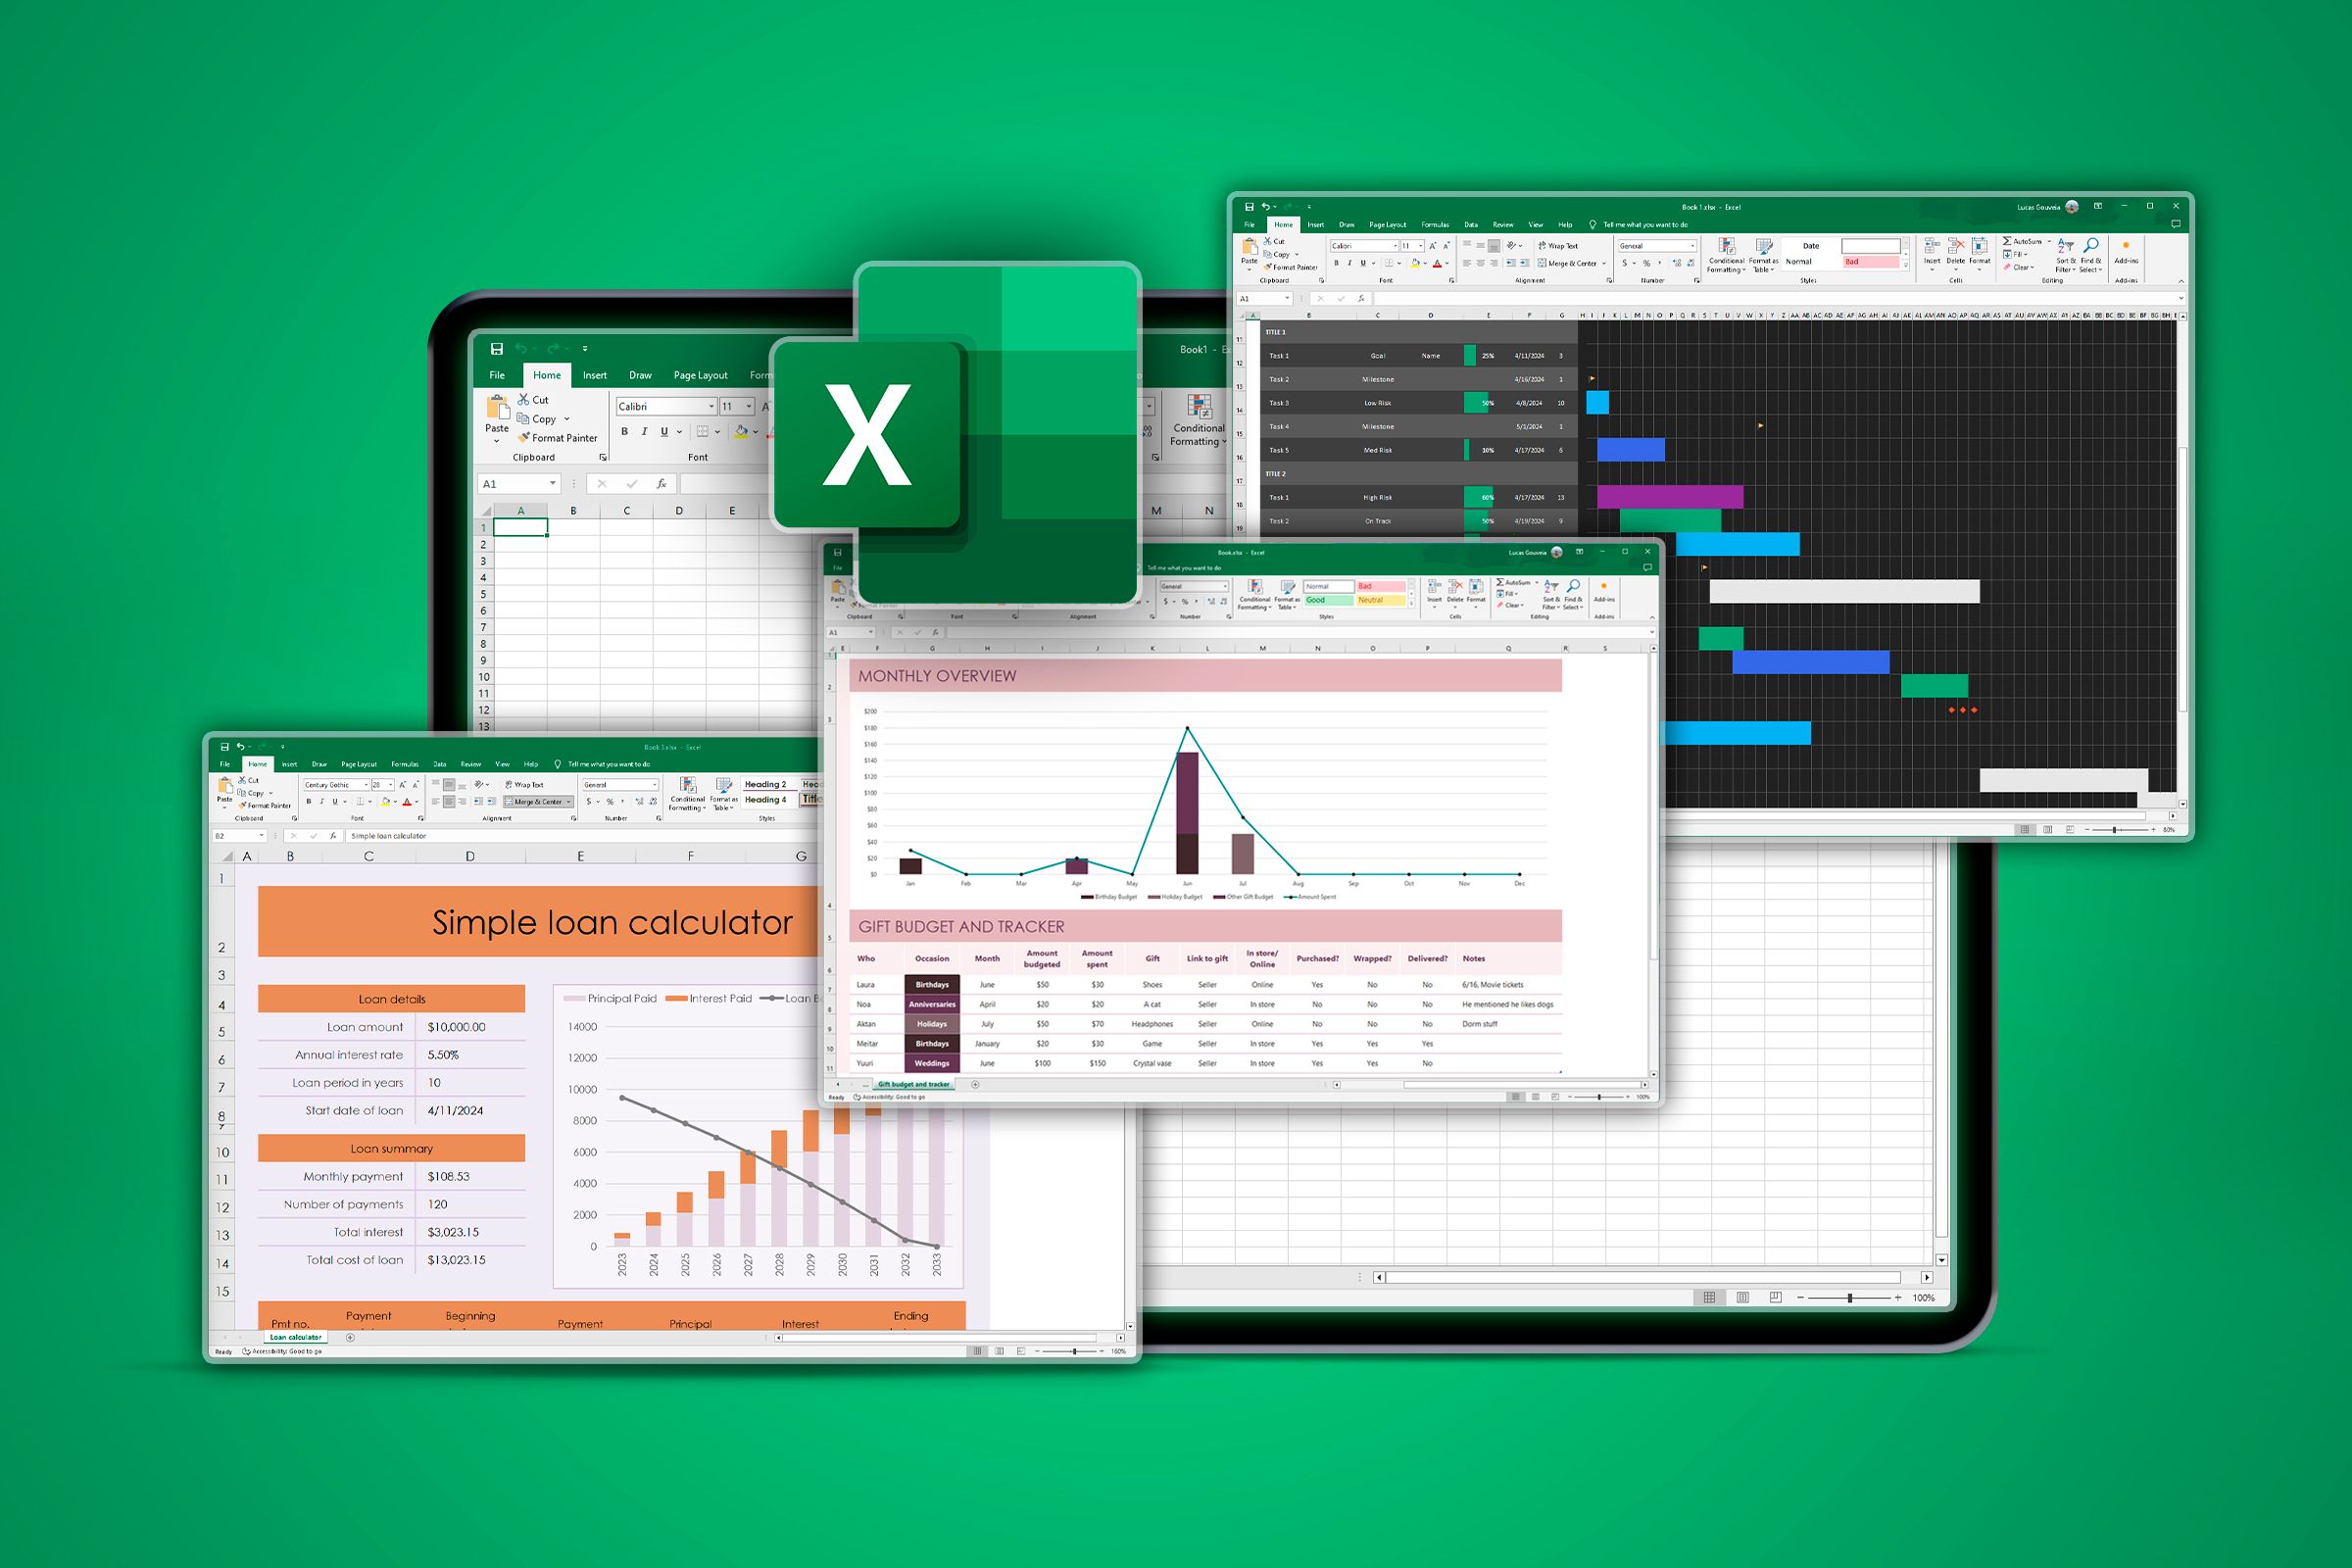 Excel/Software

